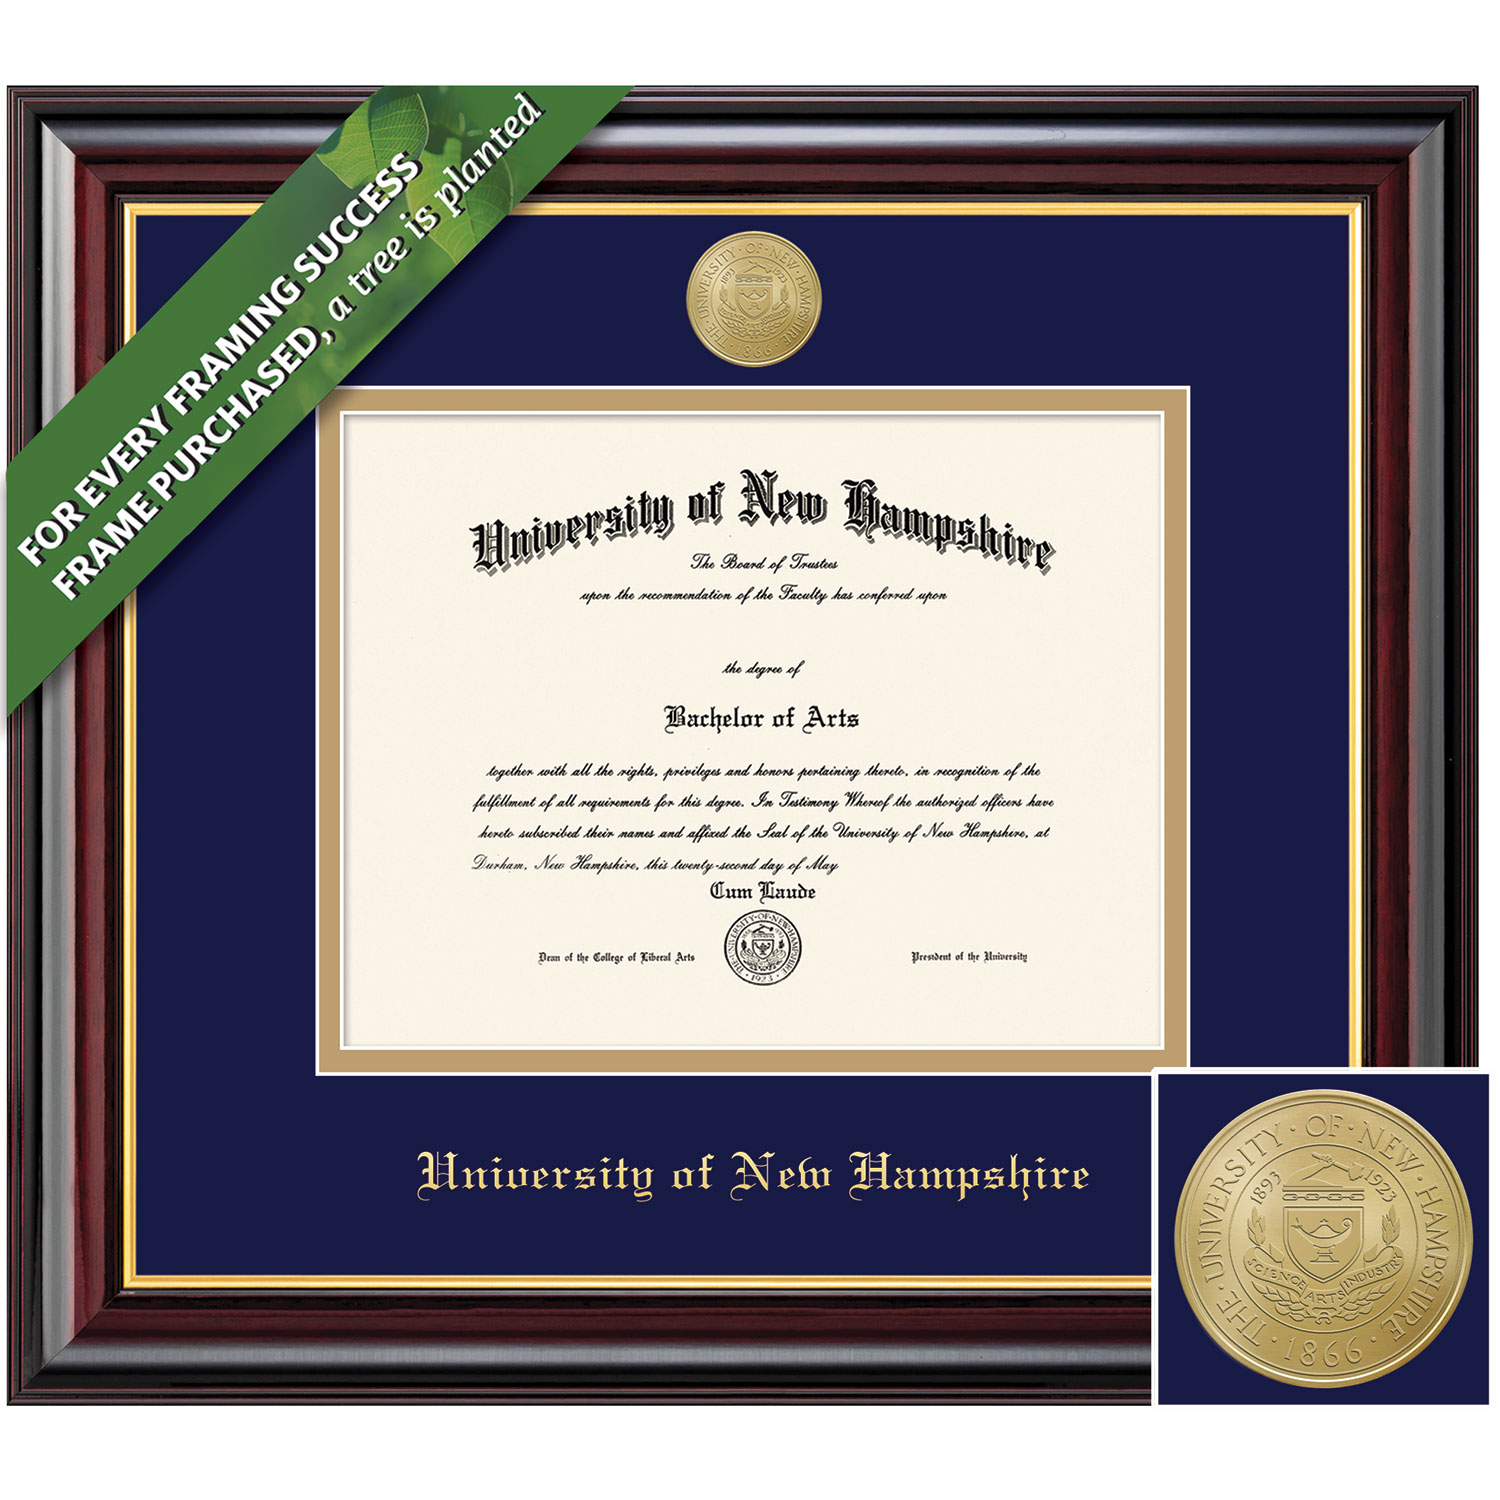 Framing Success 11 x 14 Windsor Gold Medallion Doctorate Diploma Frame